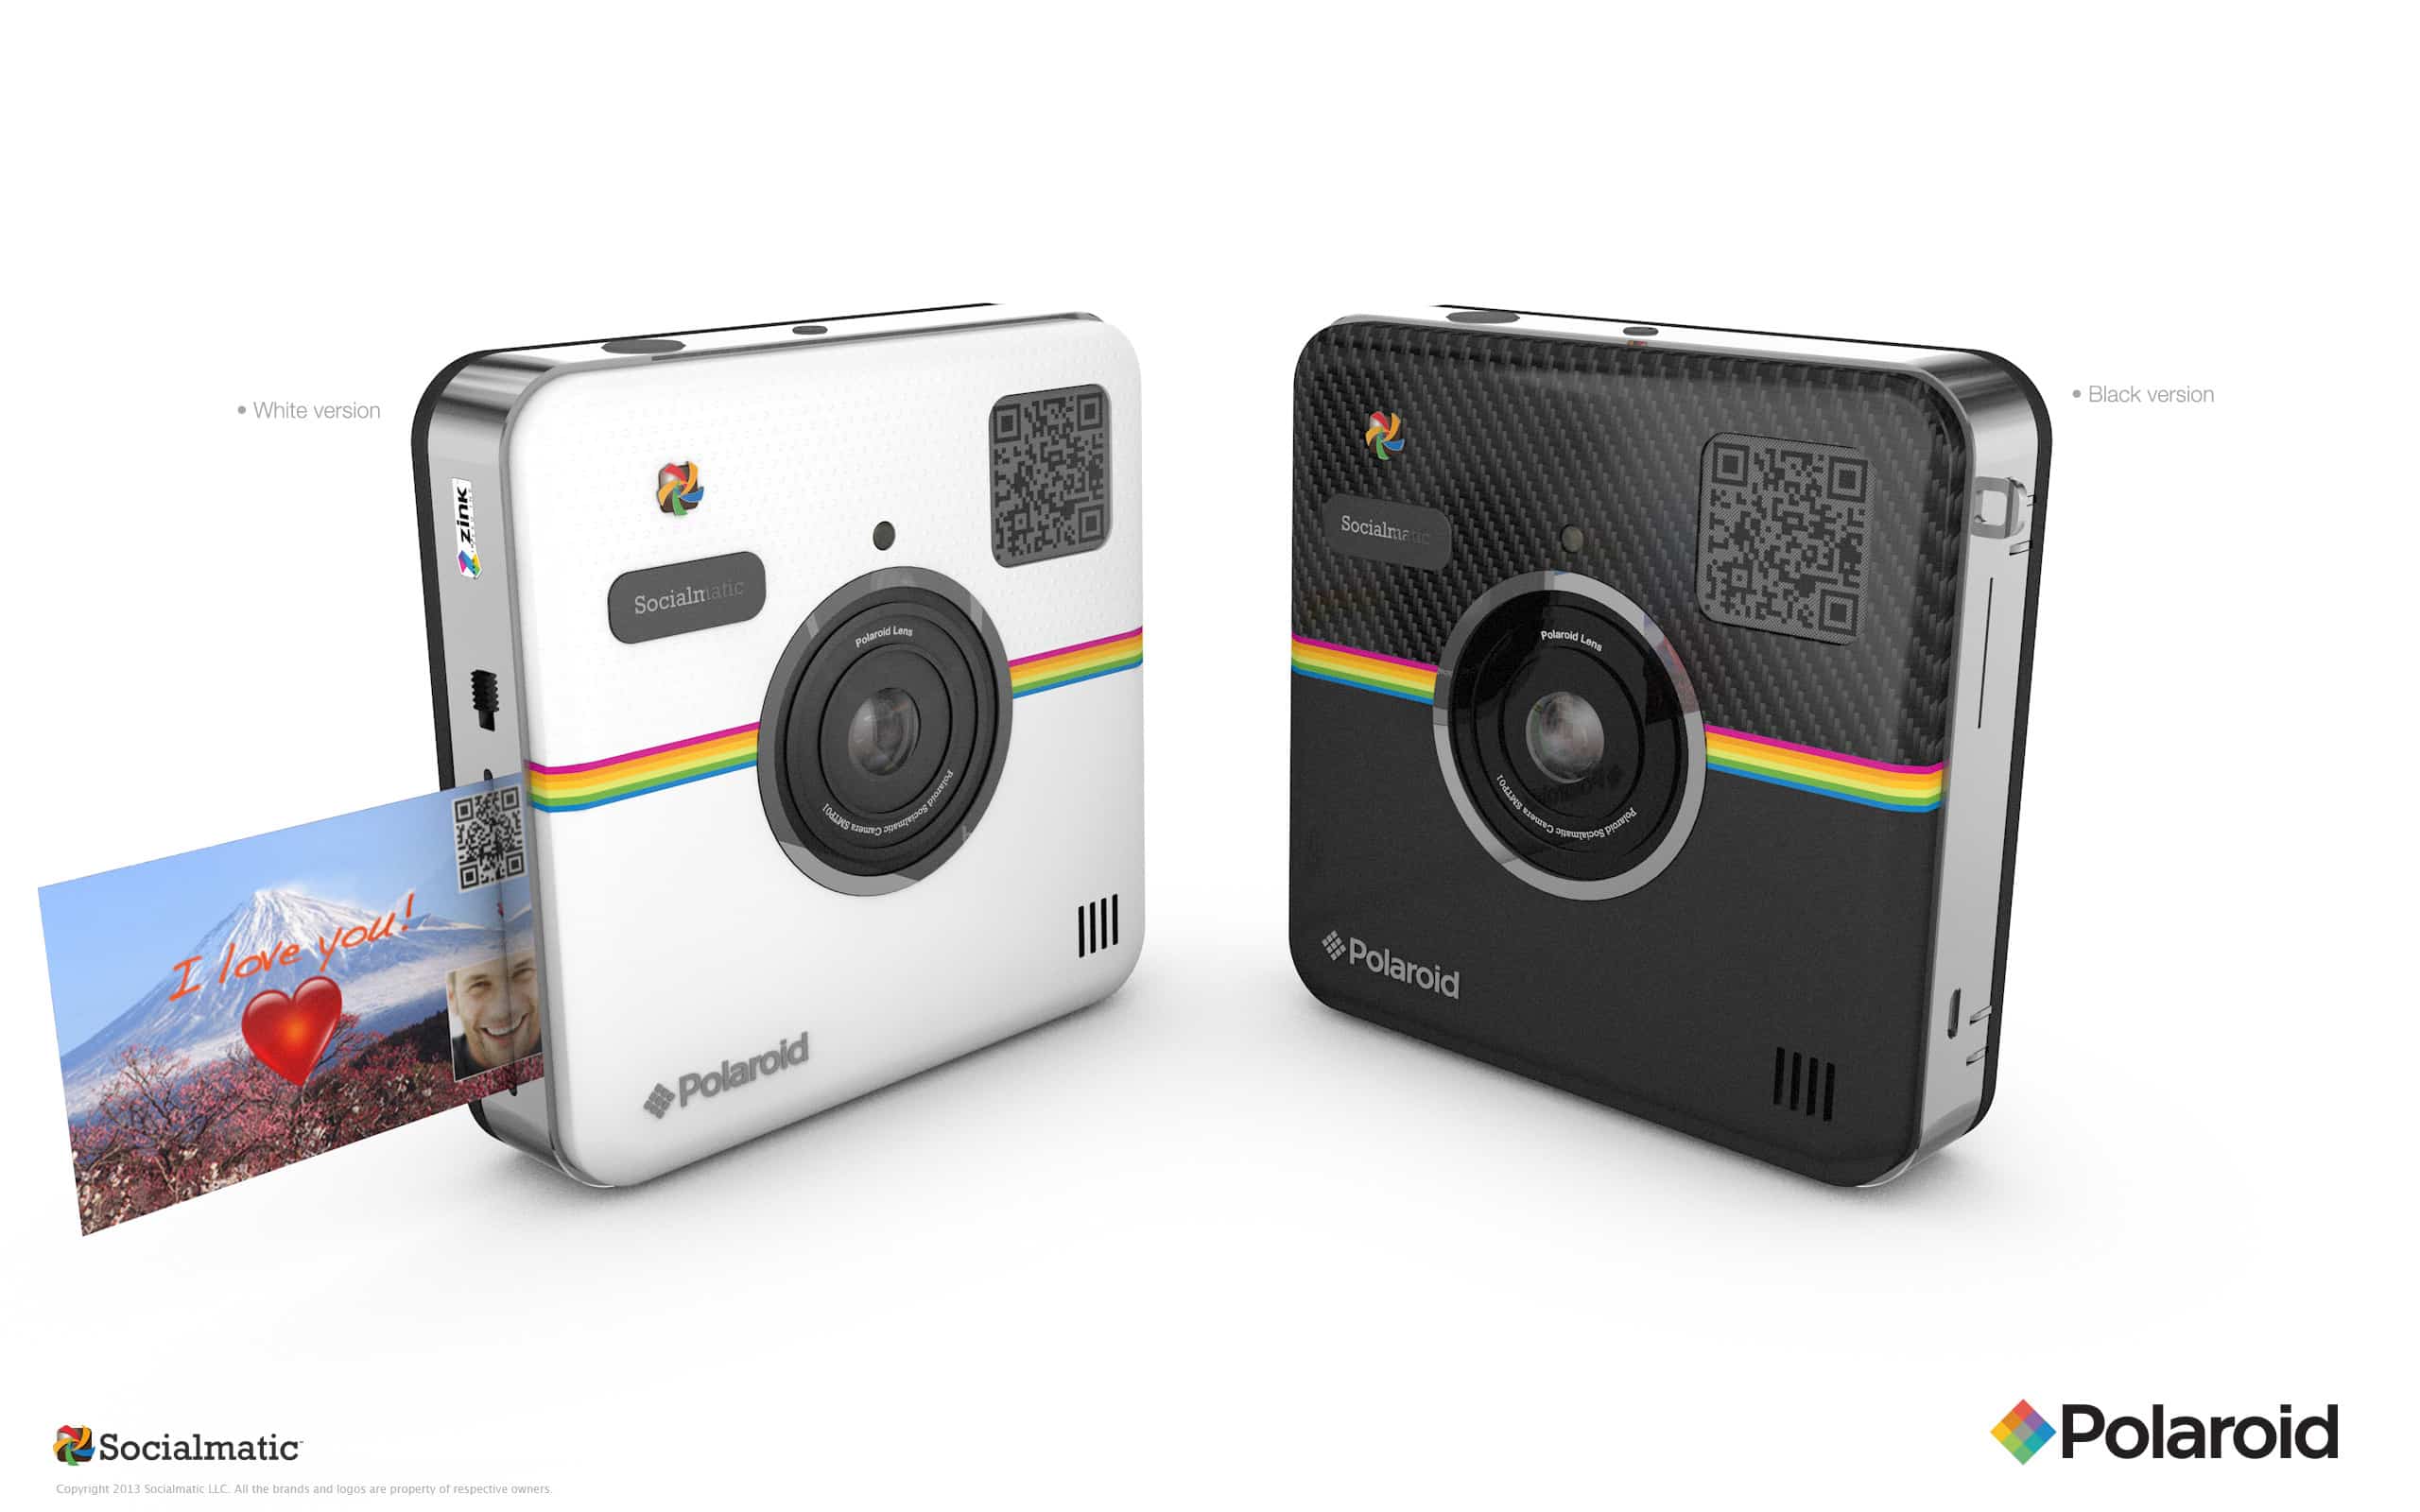 Polaroid to Release Their Socialmatic Camera This Fall